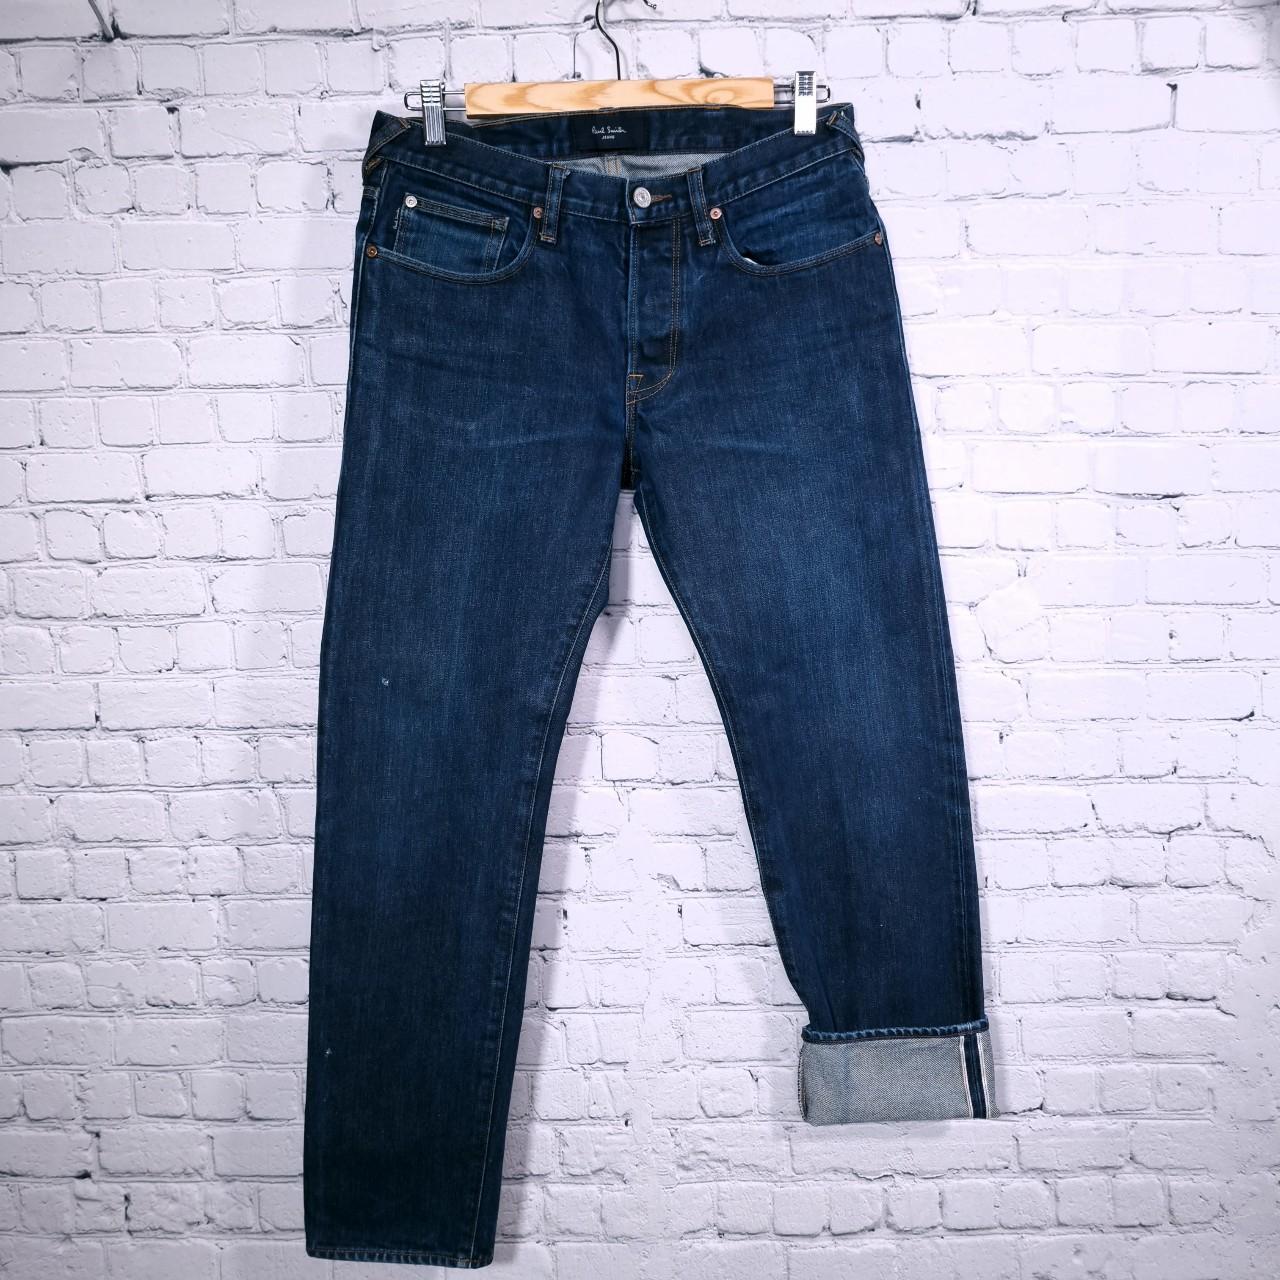 Paul Smith Selvedge Jeans Men's 31W 29L Blue Slim... - Depop